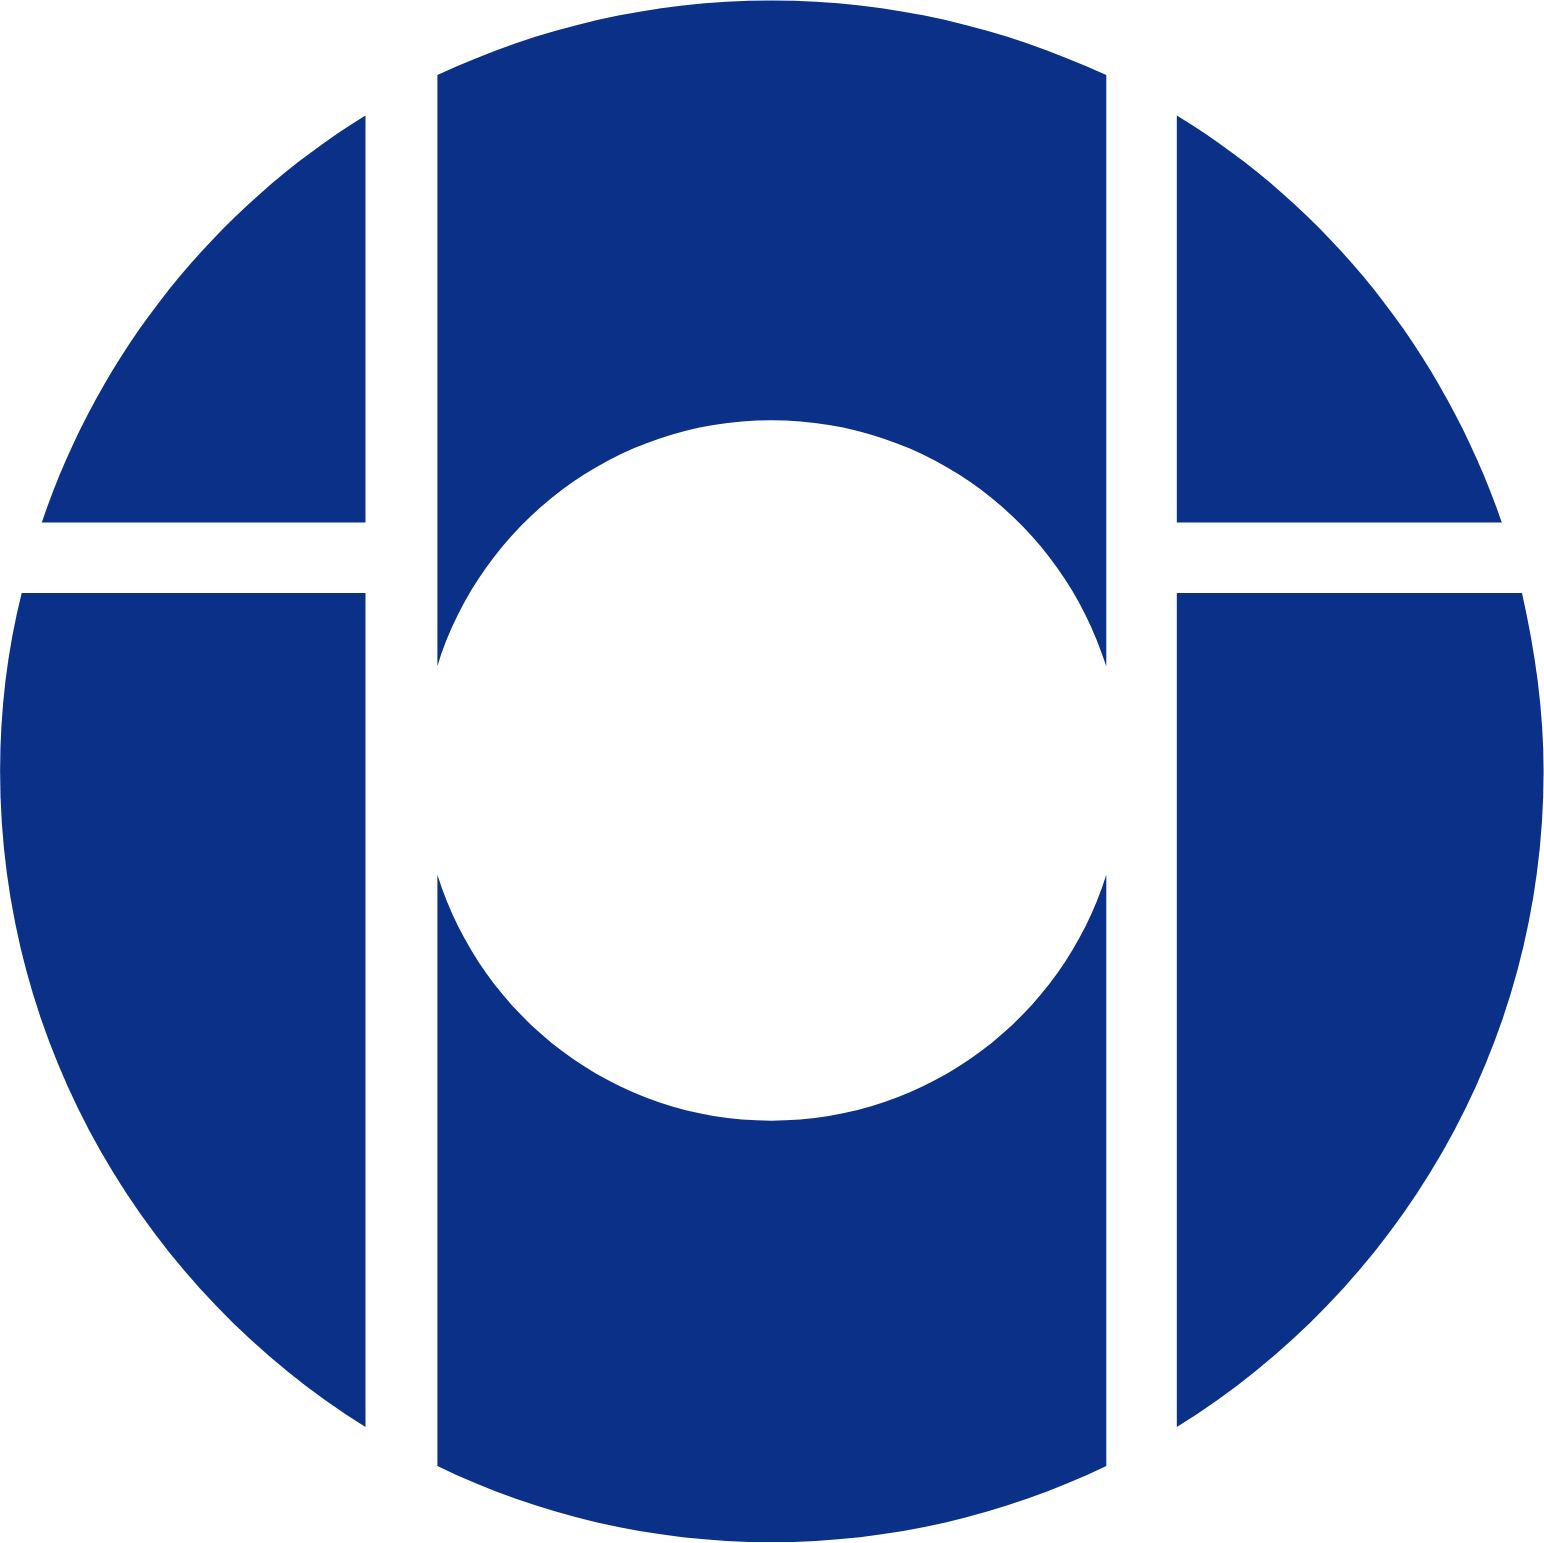 IOI Corporation Berhad logo (transparent PNG)